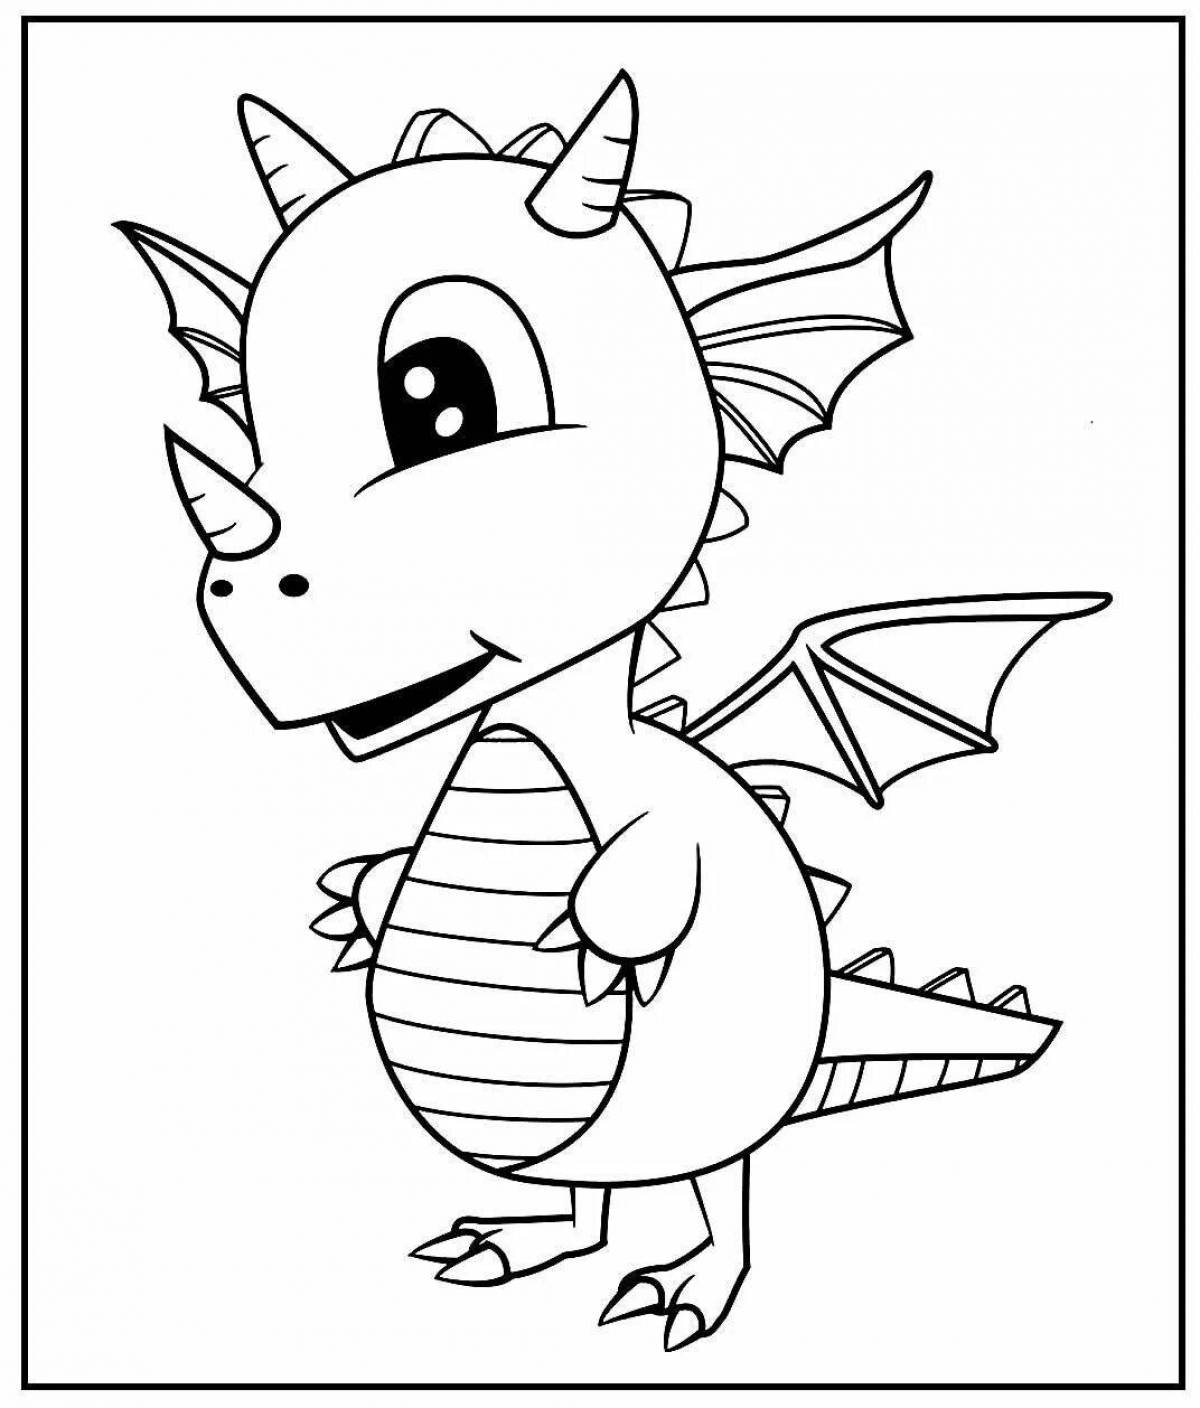 Exquisite cute dragon coloring book